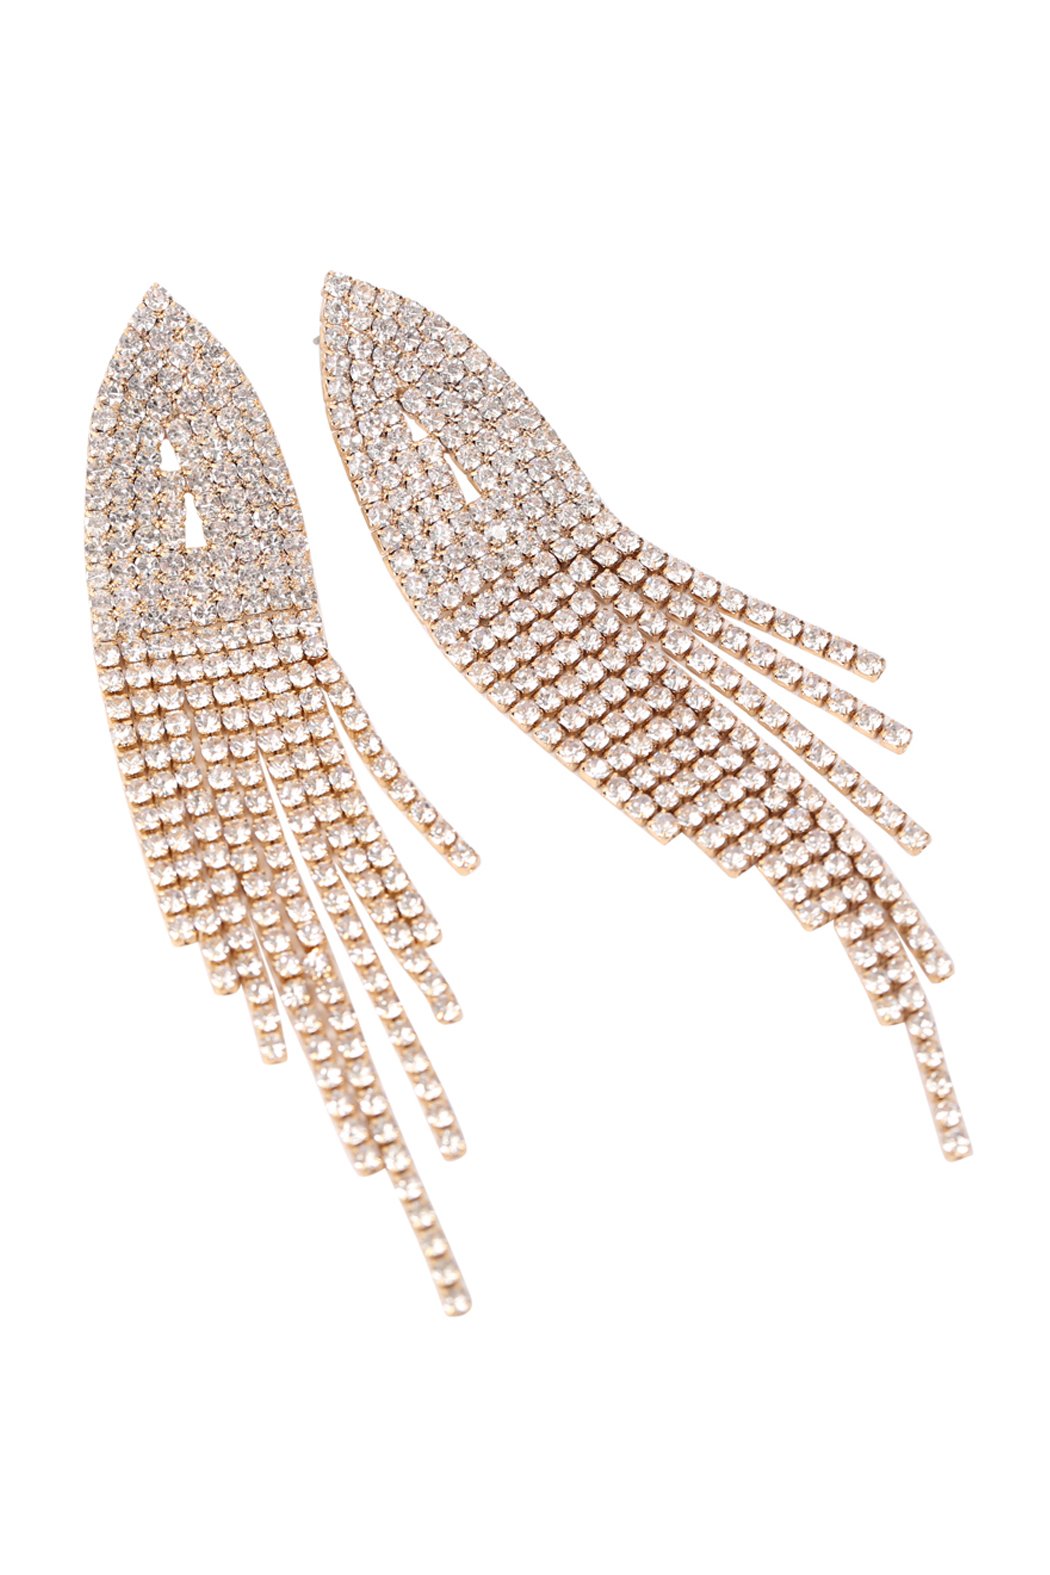 Mye1179 - Bridal Rhinestone Long Tassel Earrings